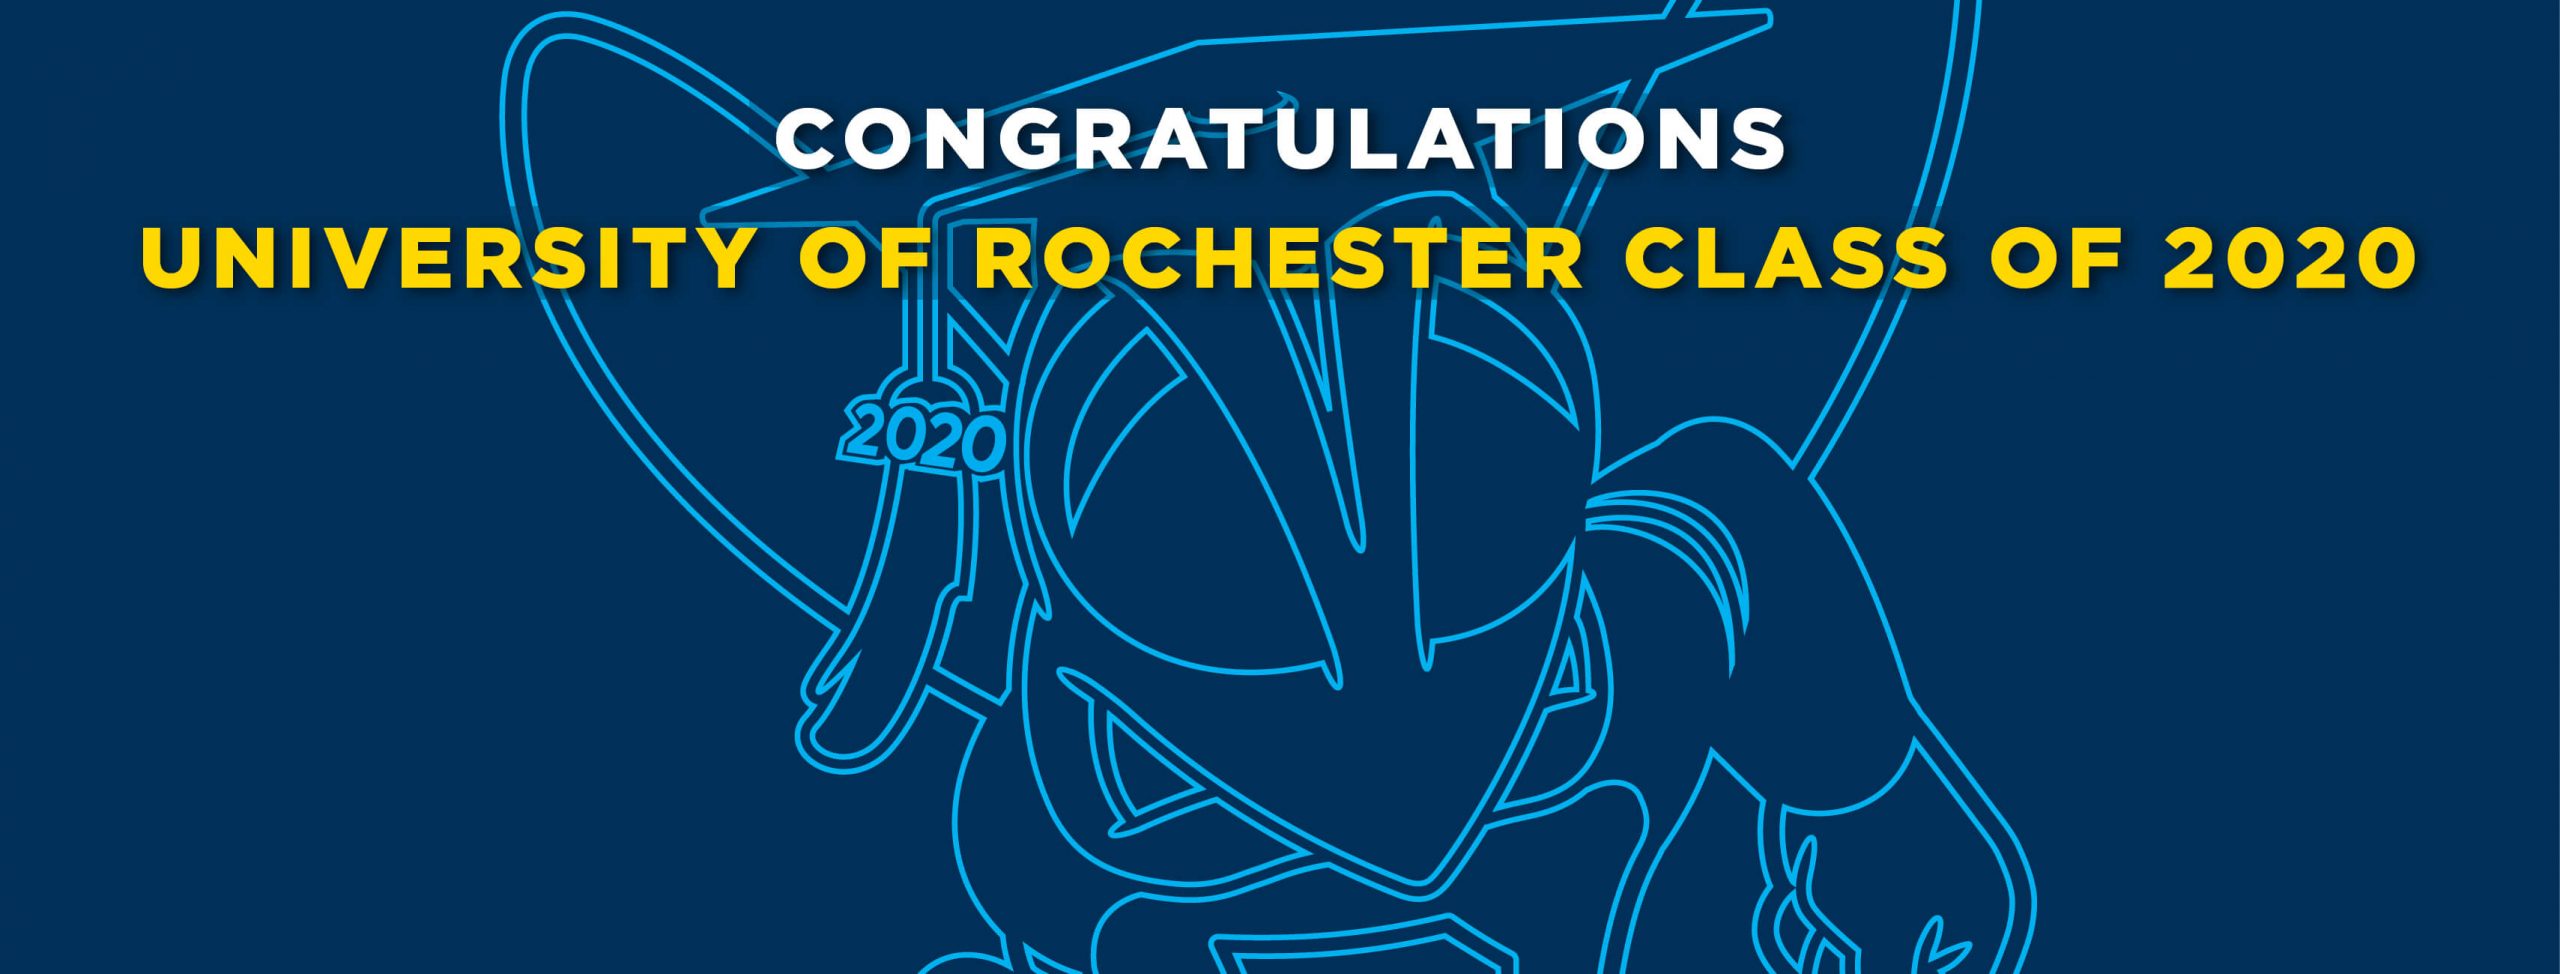 University of Rochester Class of 2020 banner.